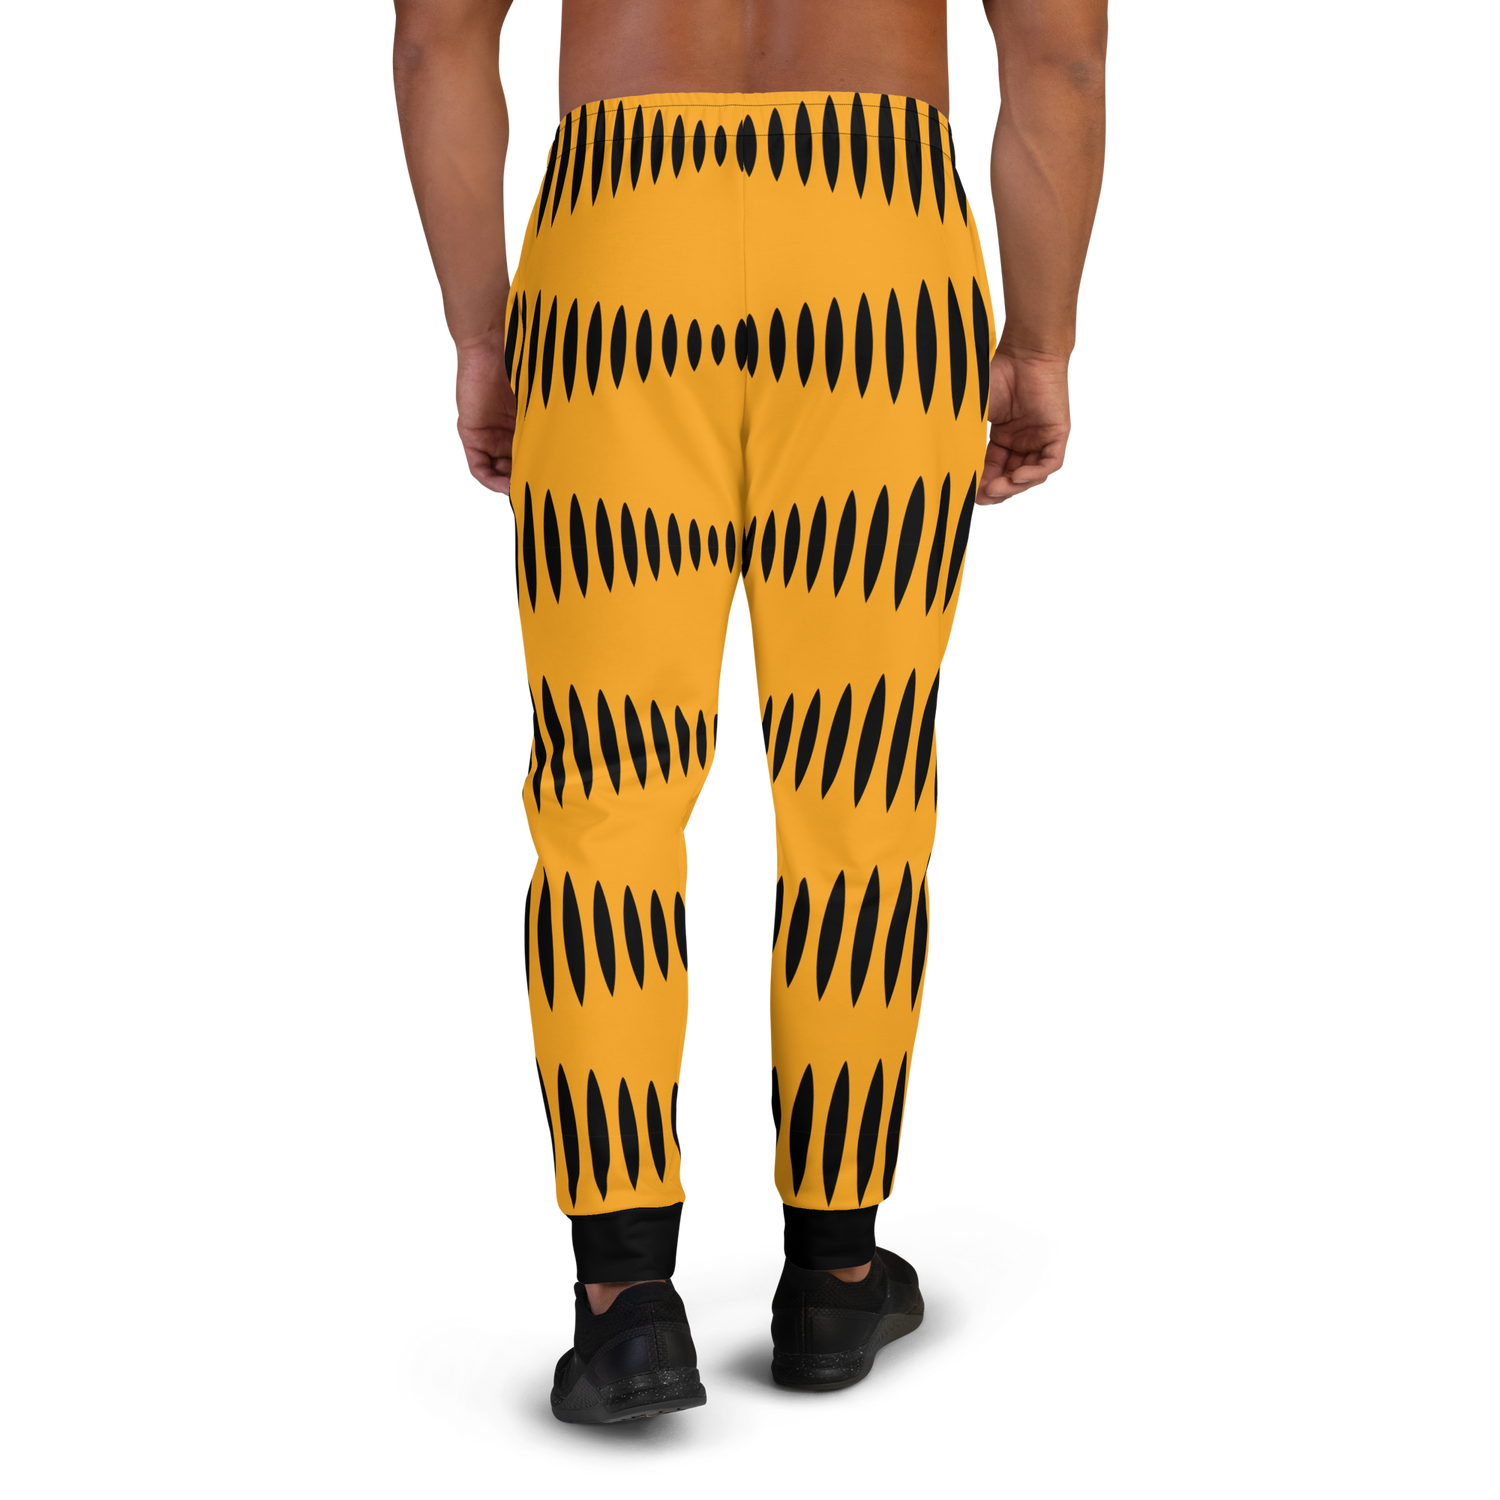 Garfield Pajama Pants Men's Adult Cartoon Cat Grid Loungewear Sleep Pants  (Small) Black at  Men's Clothing store